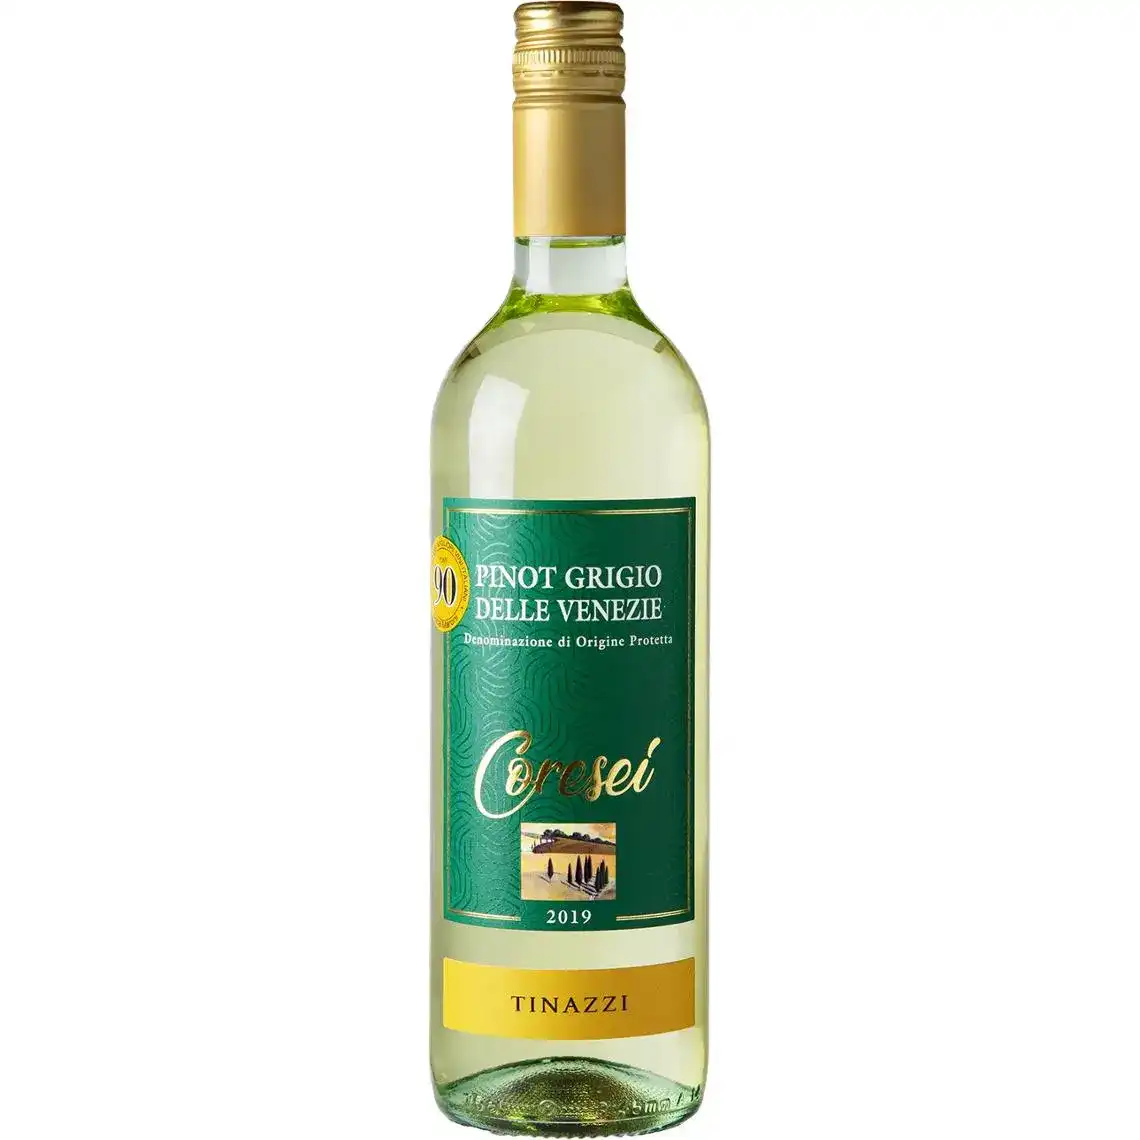 Фото 1 - Вино Coresei Pinot Grigio delle Venezie DOP біле сухе 12% 0,75л